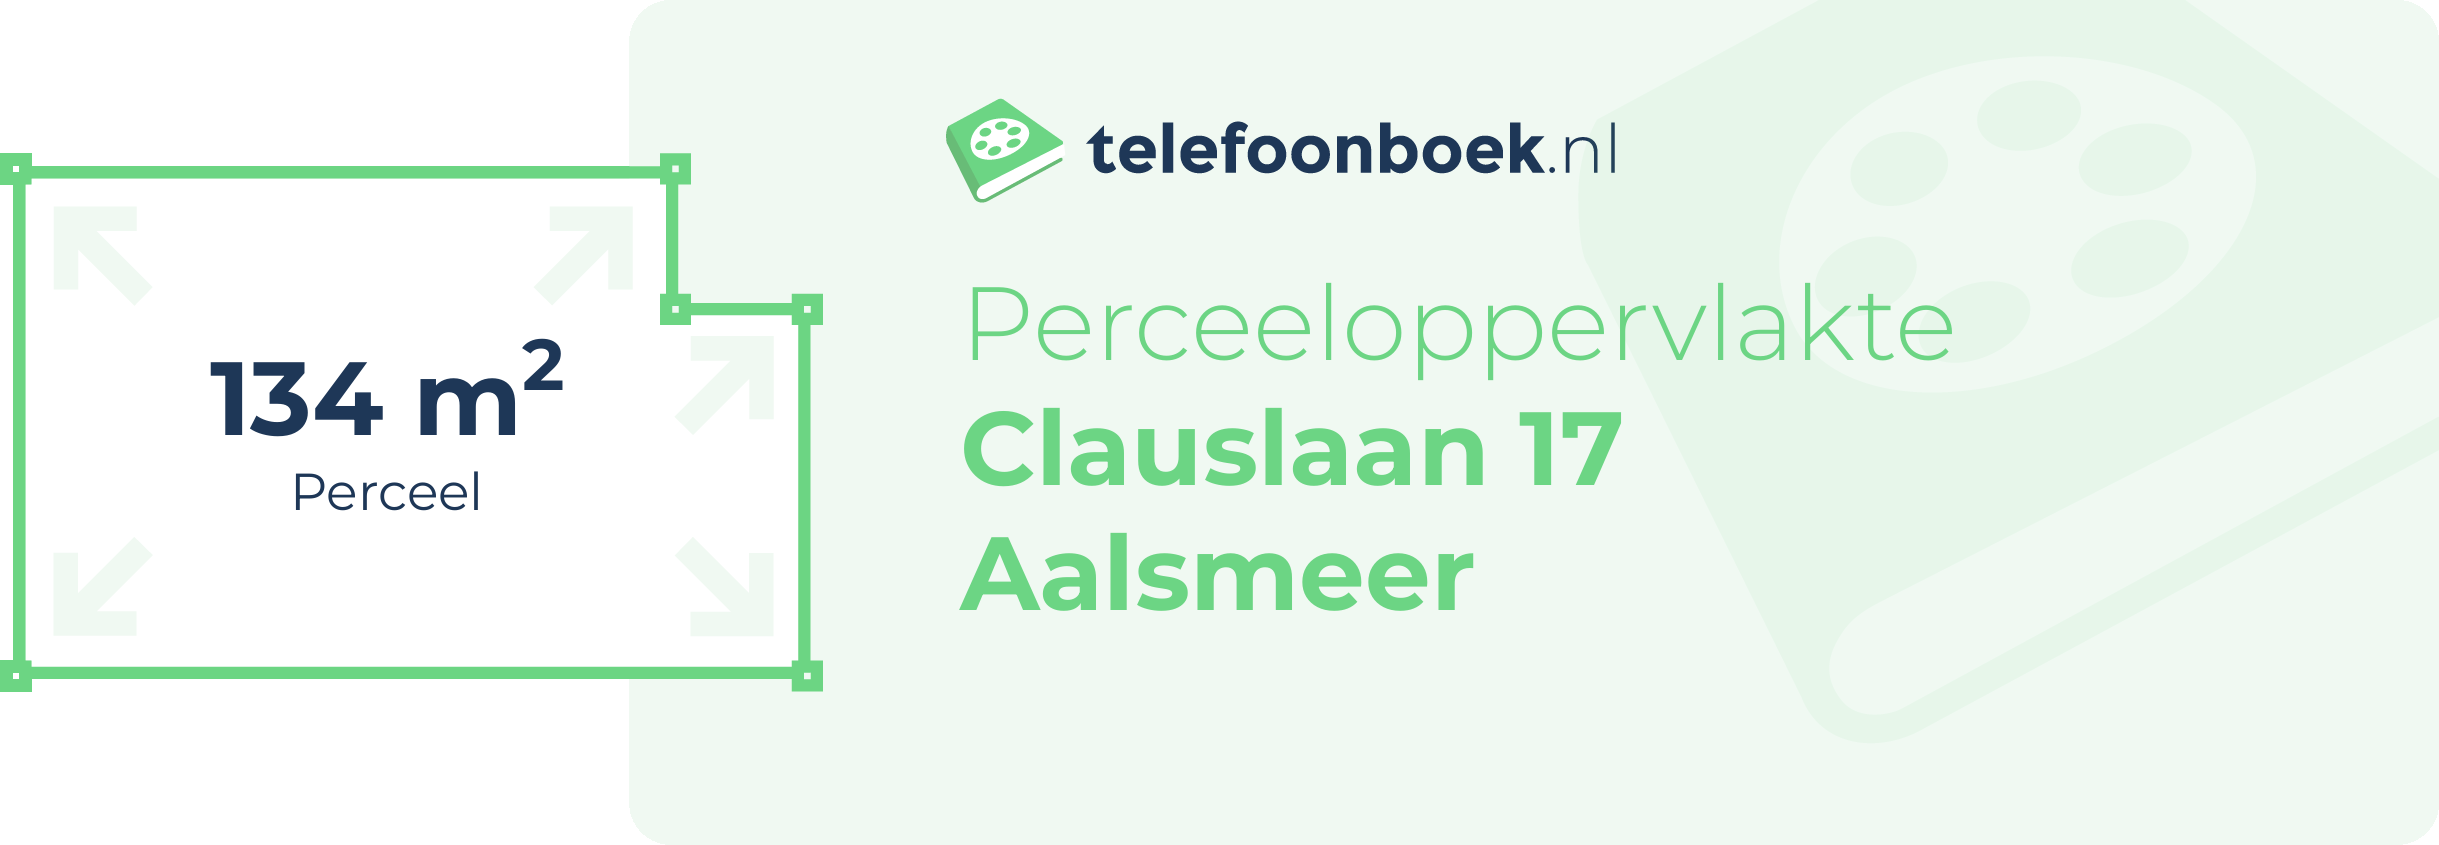 Perceeloppervlakte Clauslaan 17 Aalsmeer